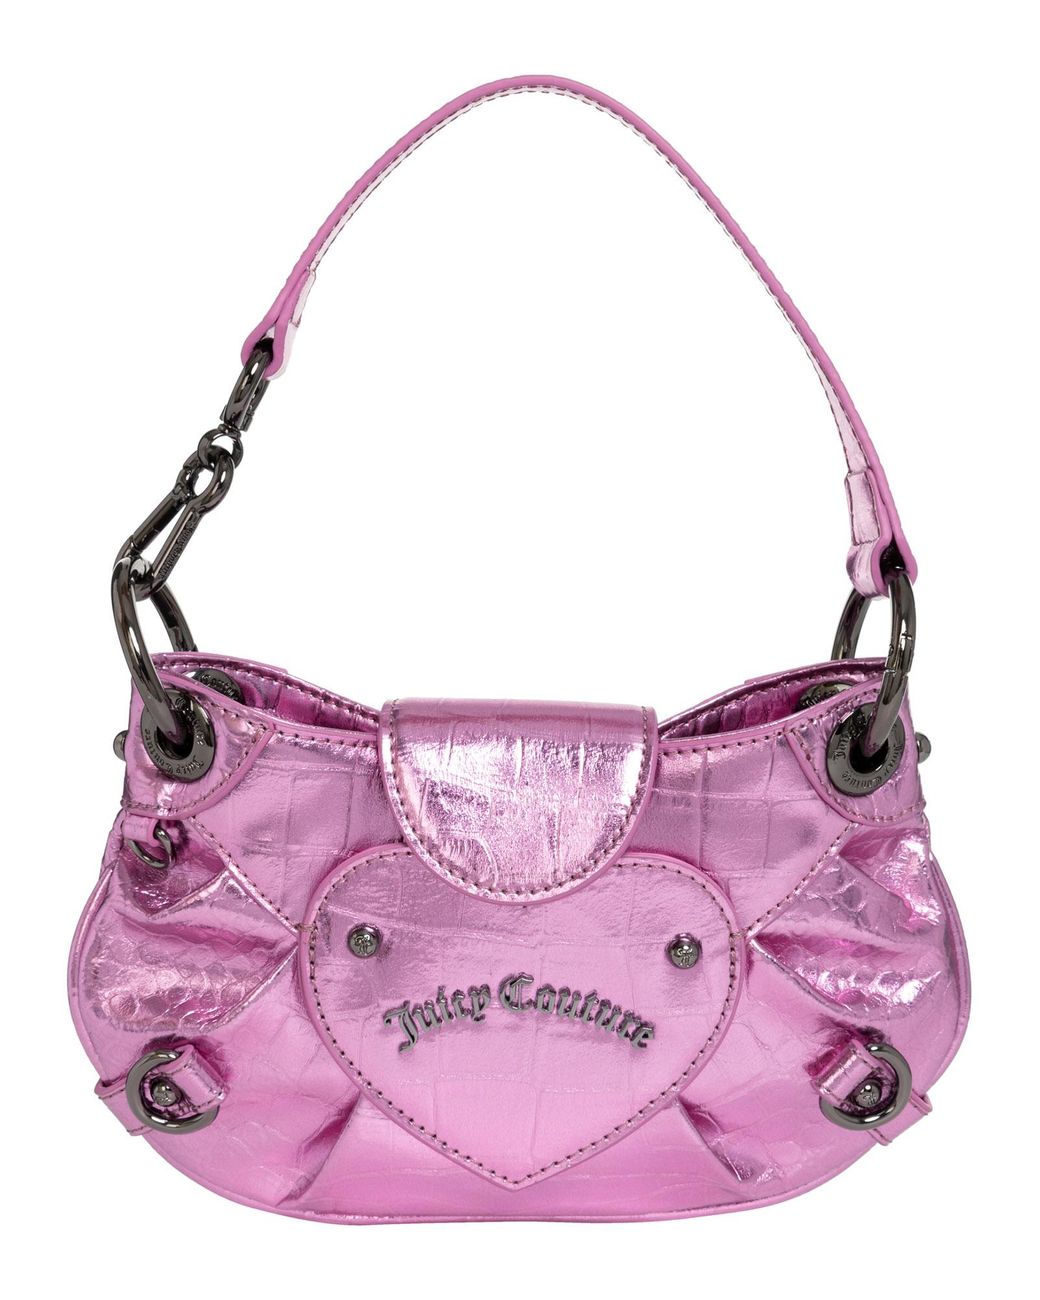 Juicy Couture Love Metallic Croco Handbag in Purple | Lyst